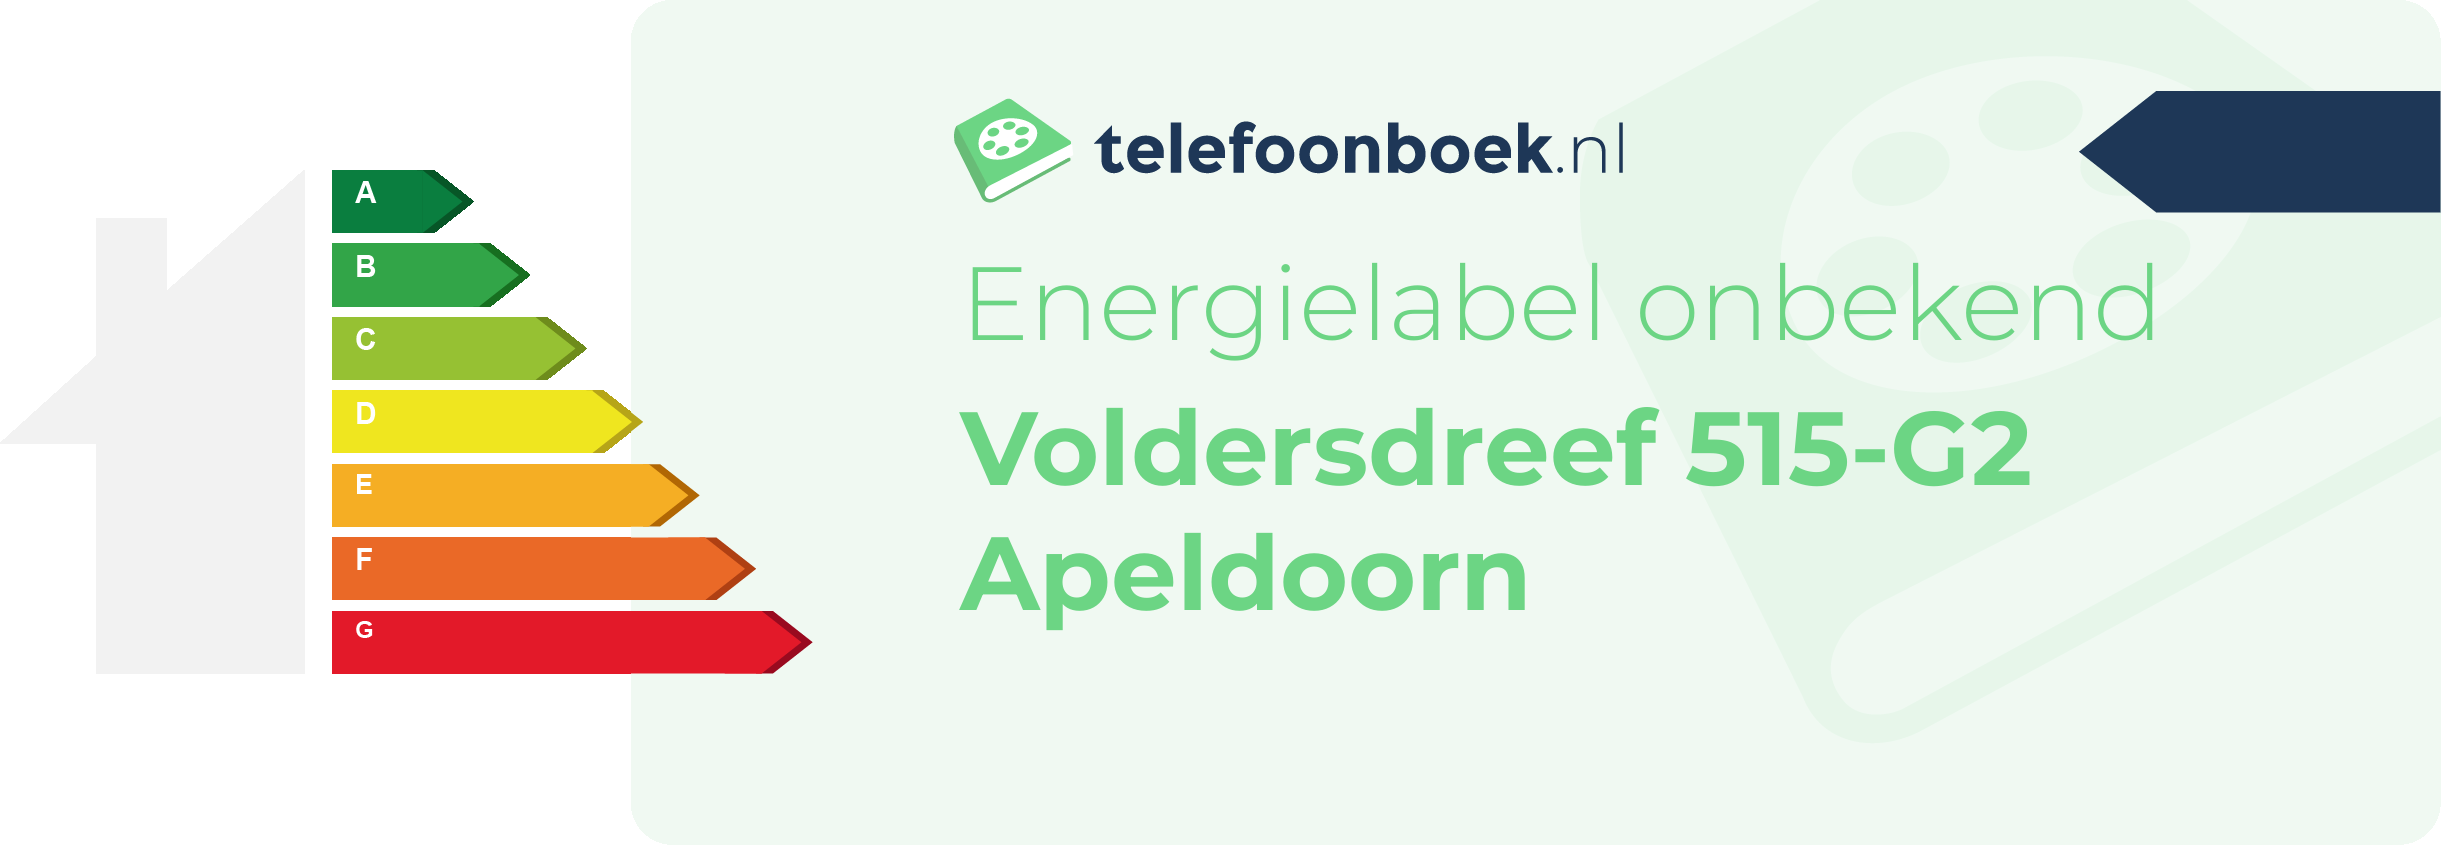 Energielabel Voldersdreef 515-G2 Apeldoorn